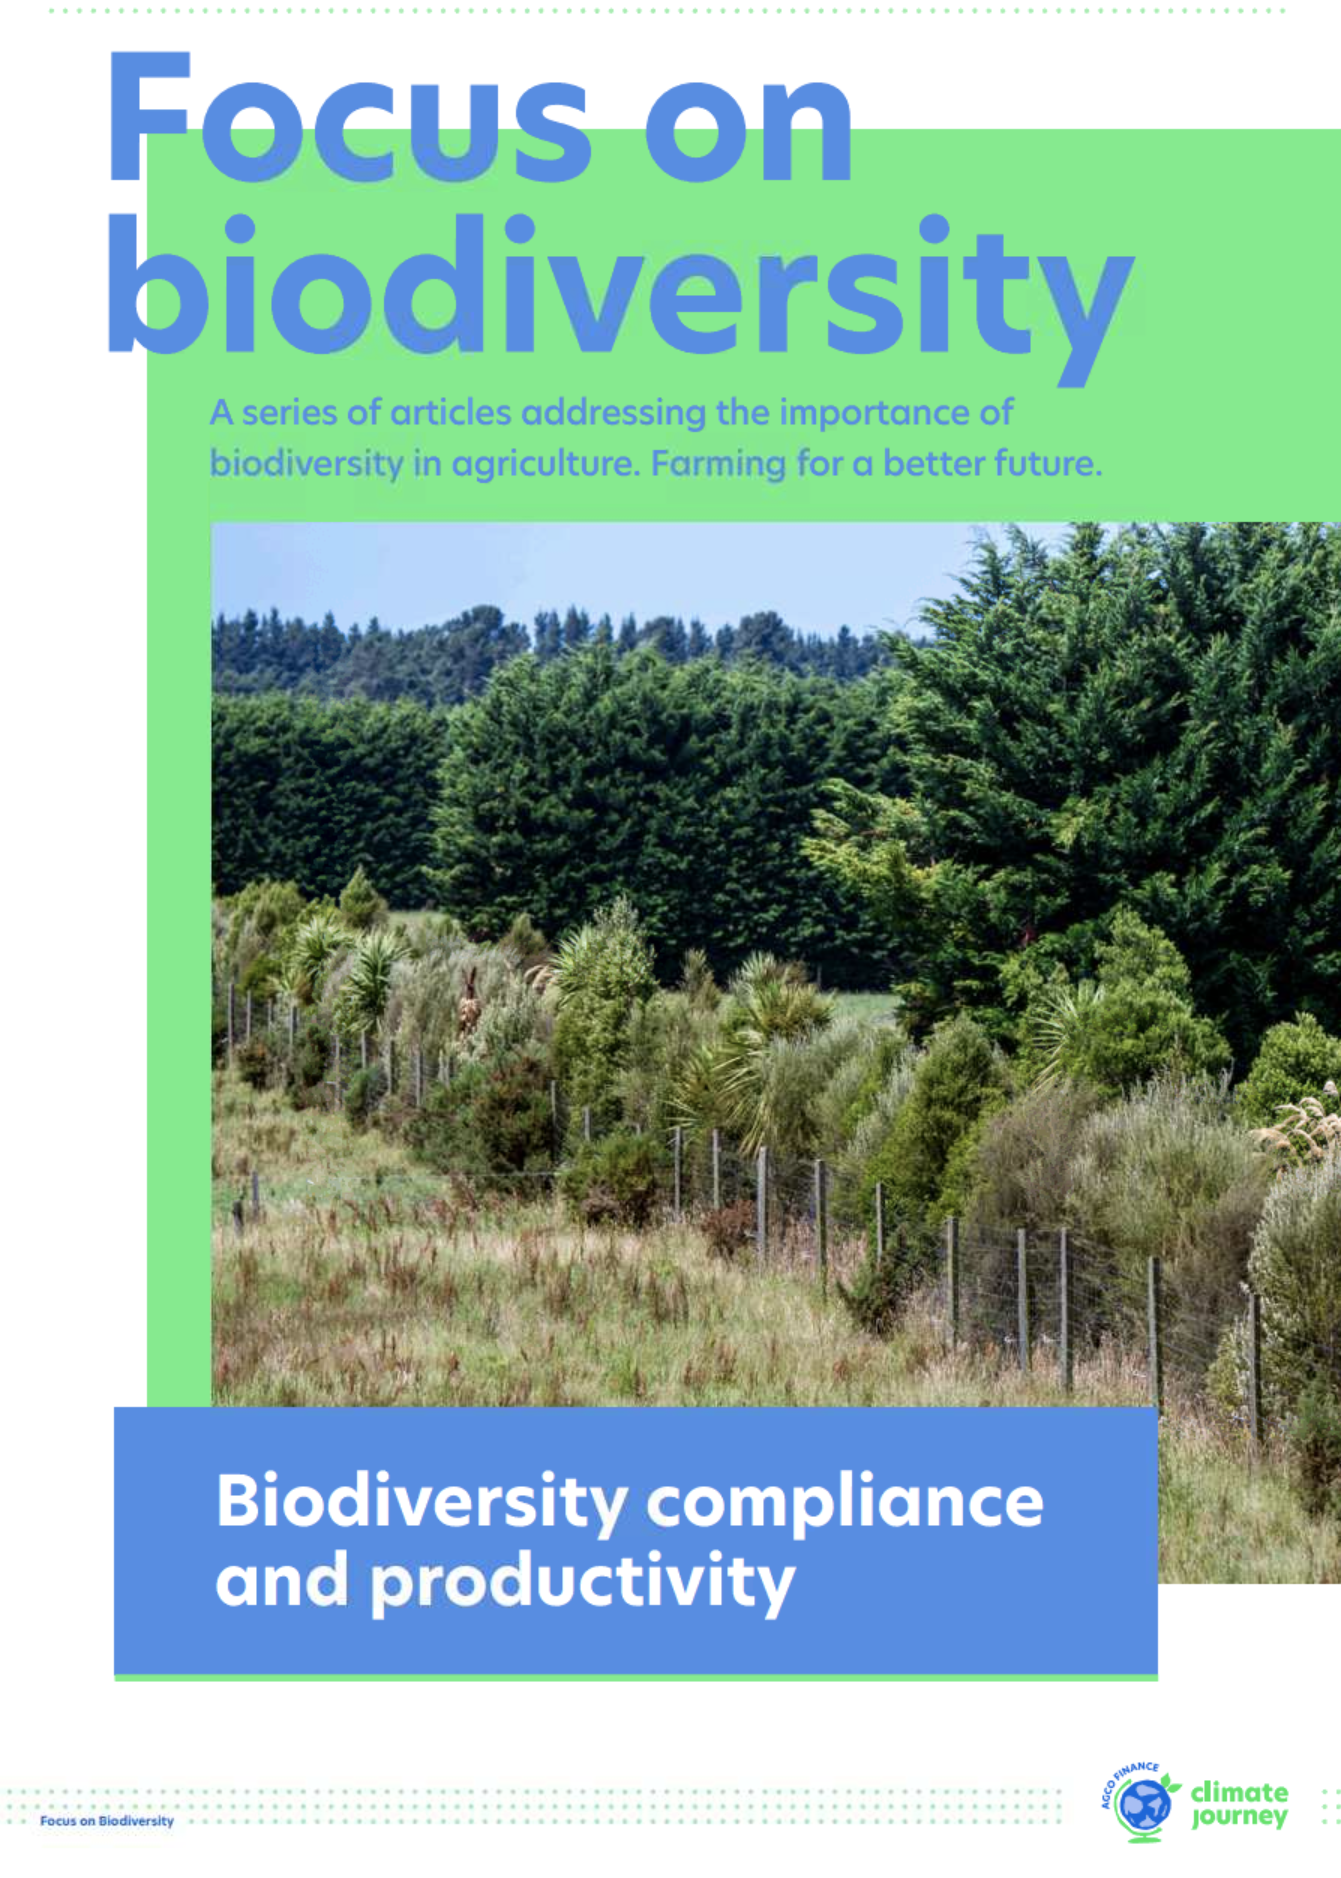 Focus on biodiversity: Biodiversity compliance and productivity